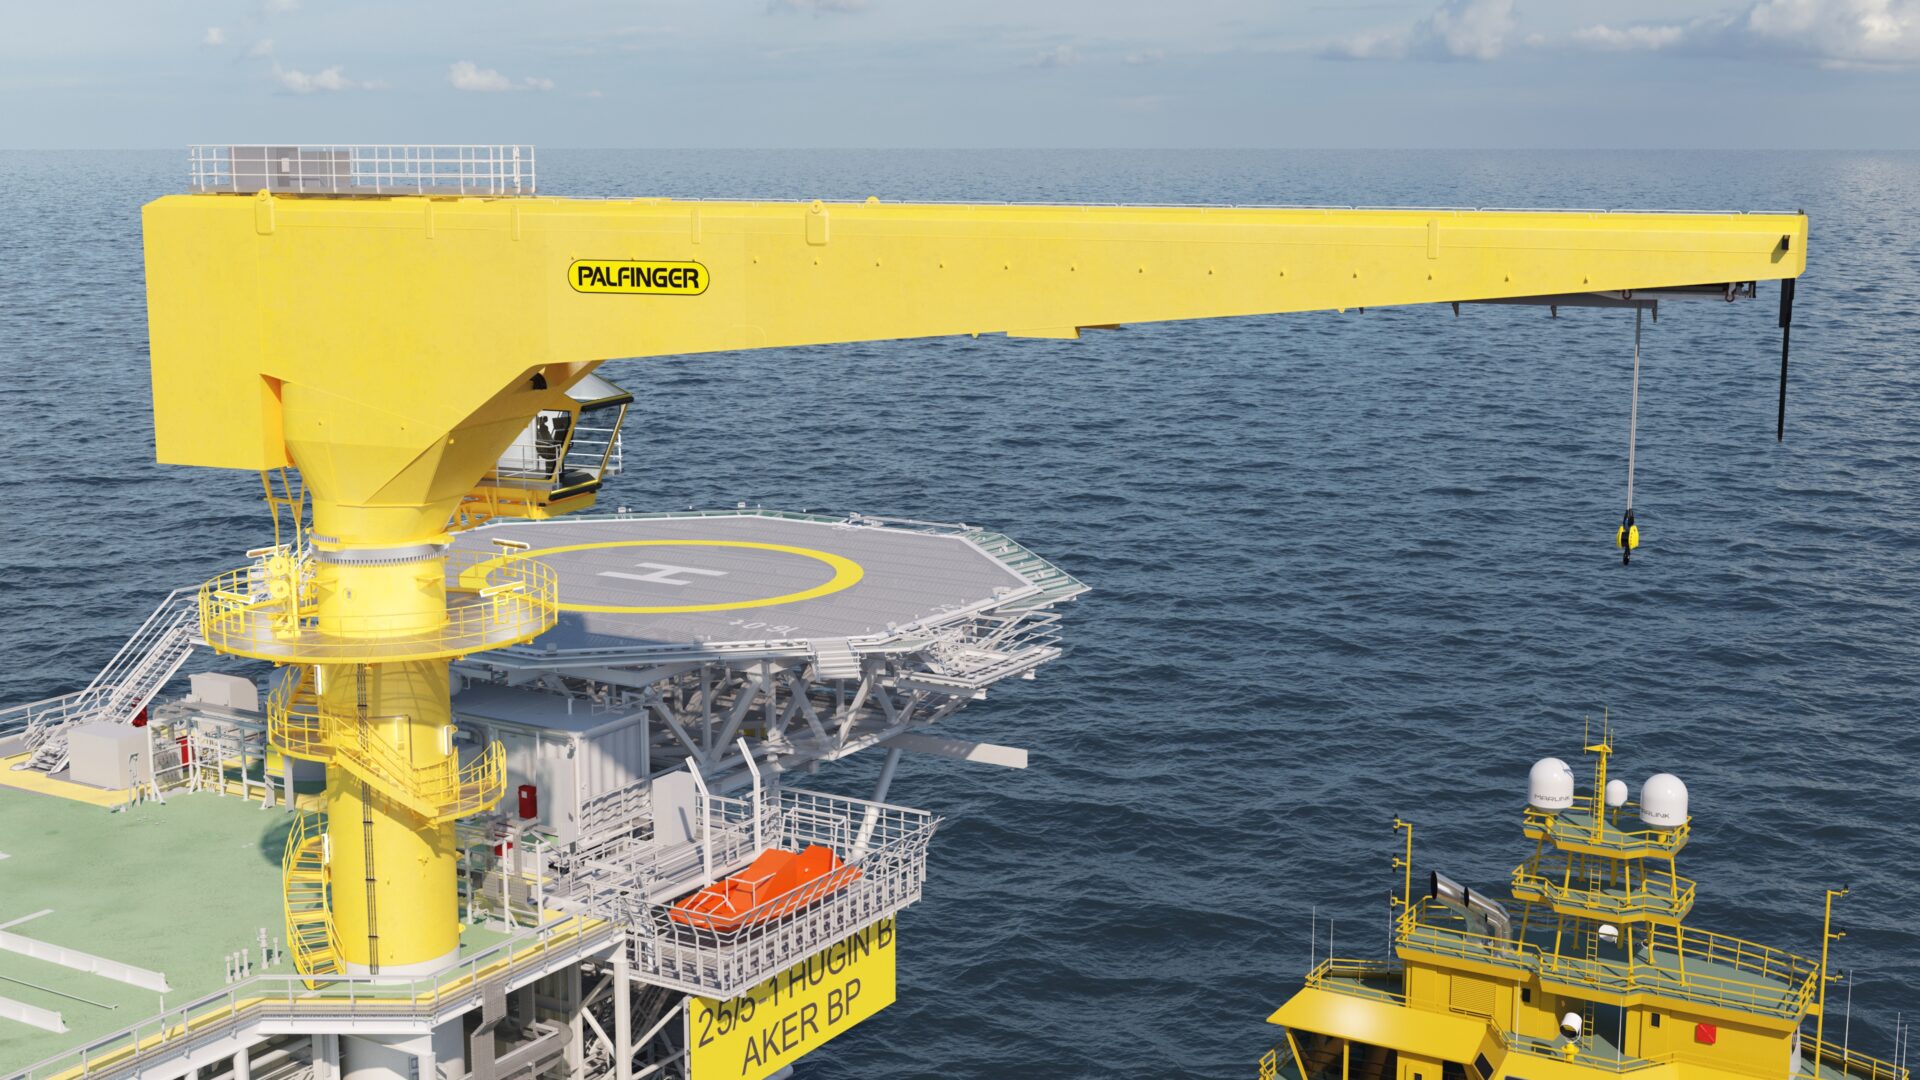 Big yellow crane mounted on an offshore platform